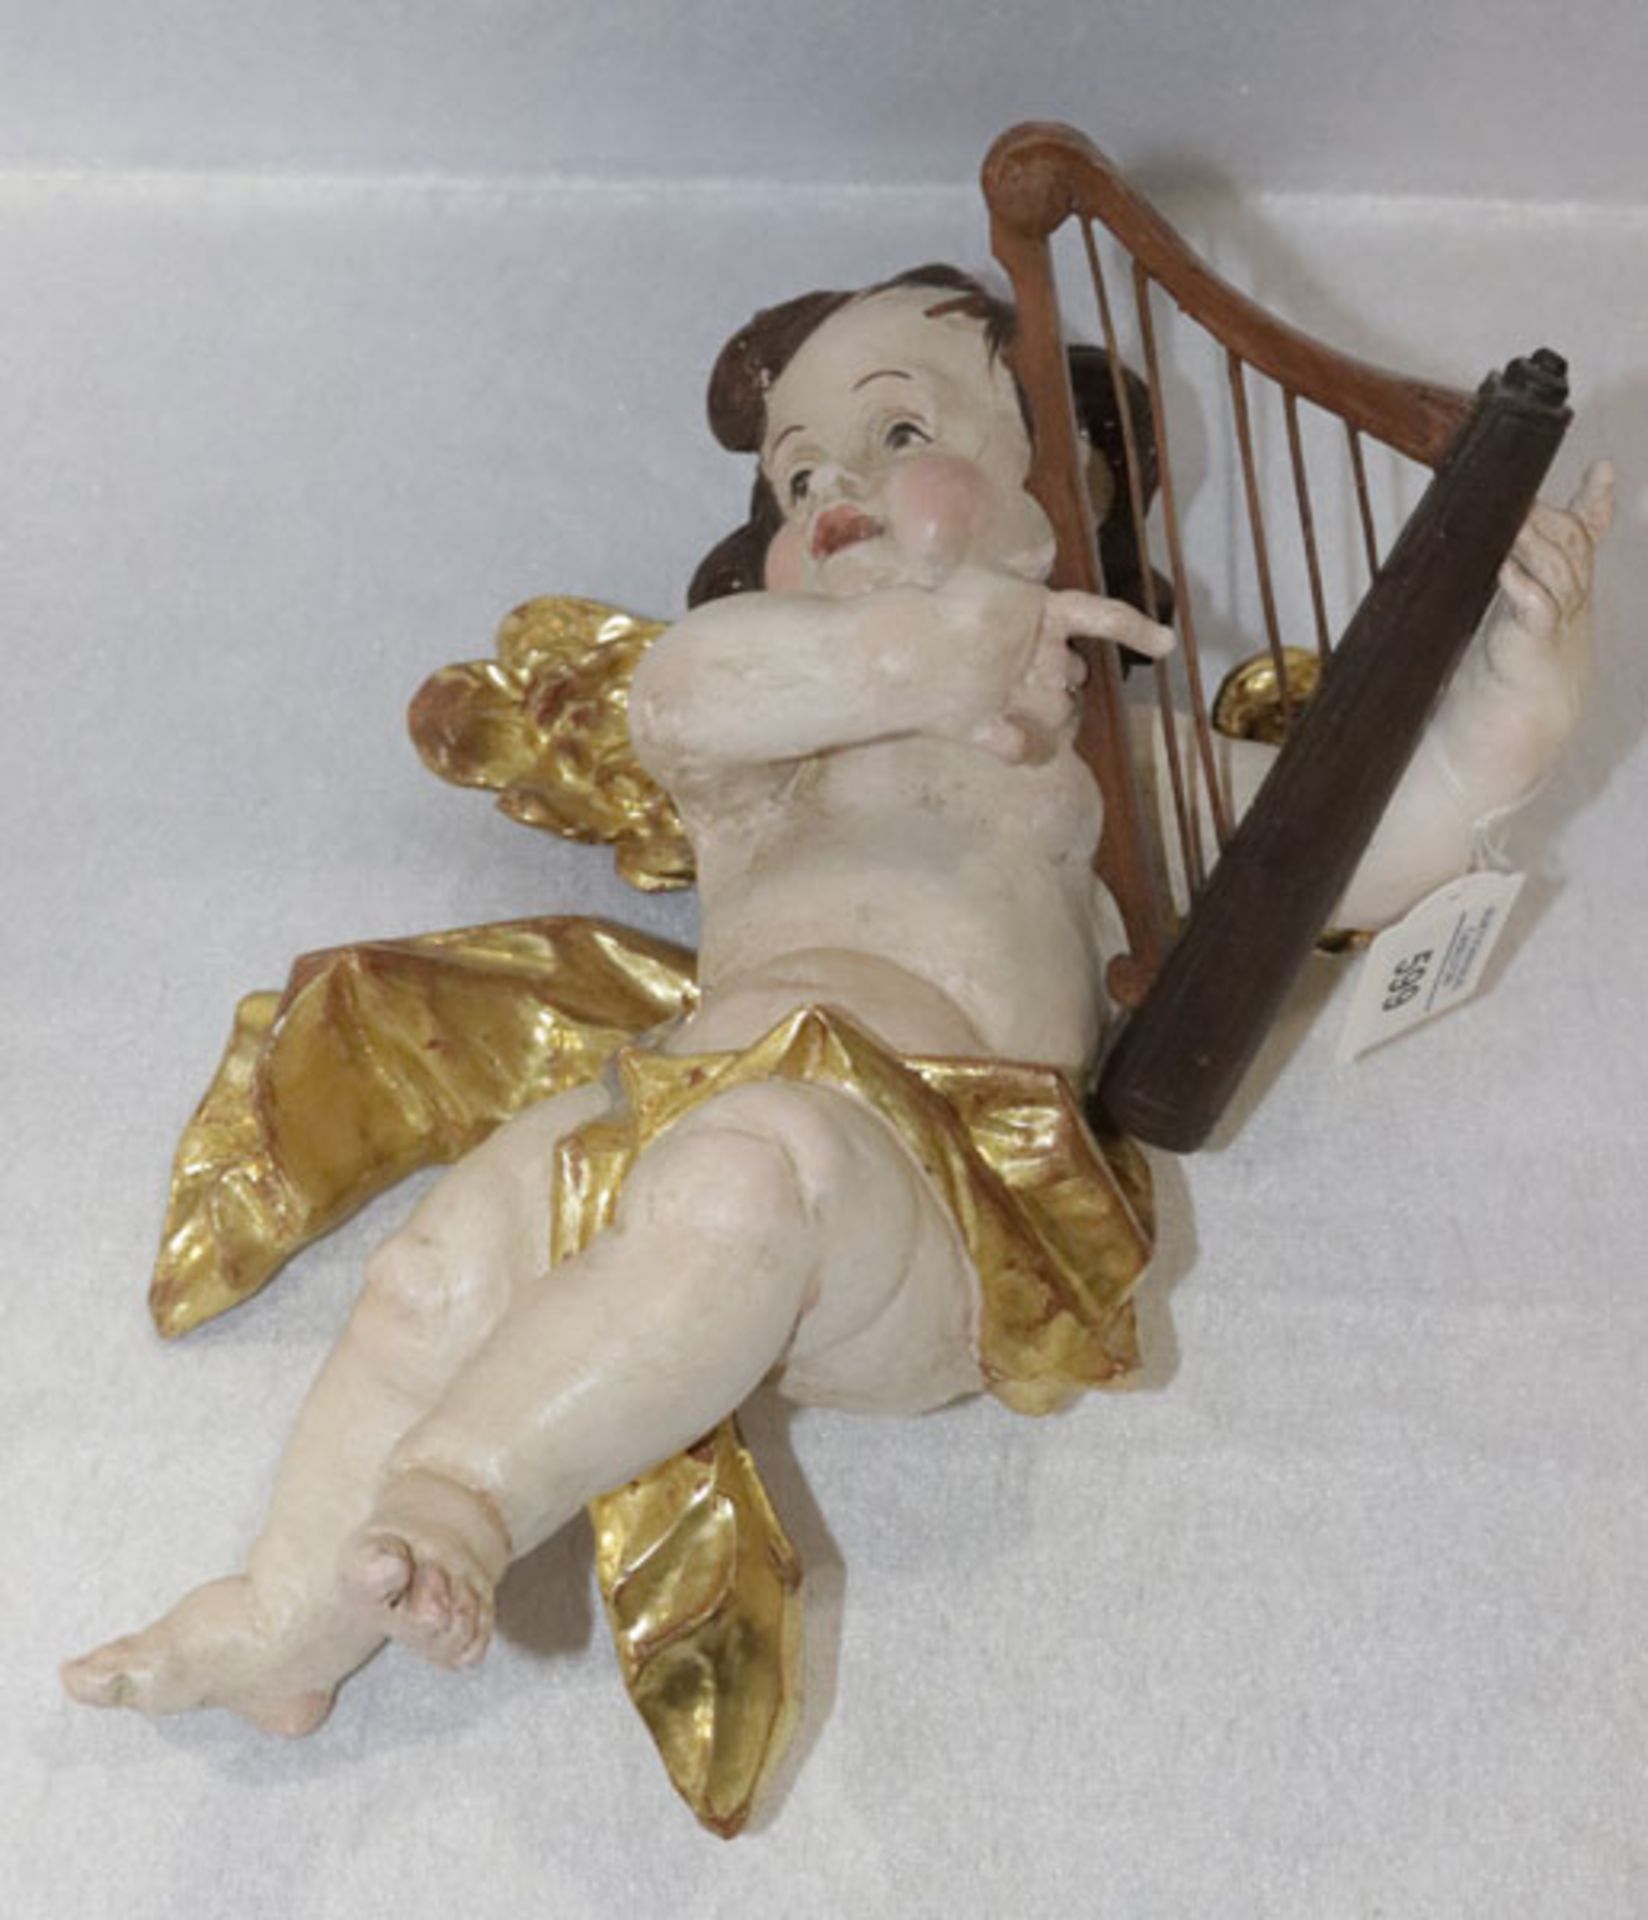 Holz Figurenskulptur 'Engel mit Harfe', farbig gefaßt, H 33 cm, B 24 cm, T 14 cm, leicht berieben